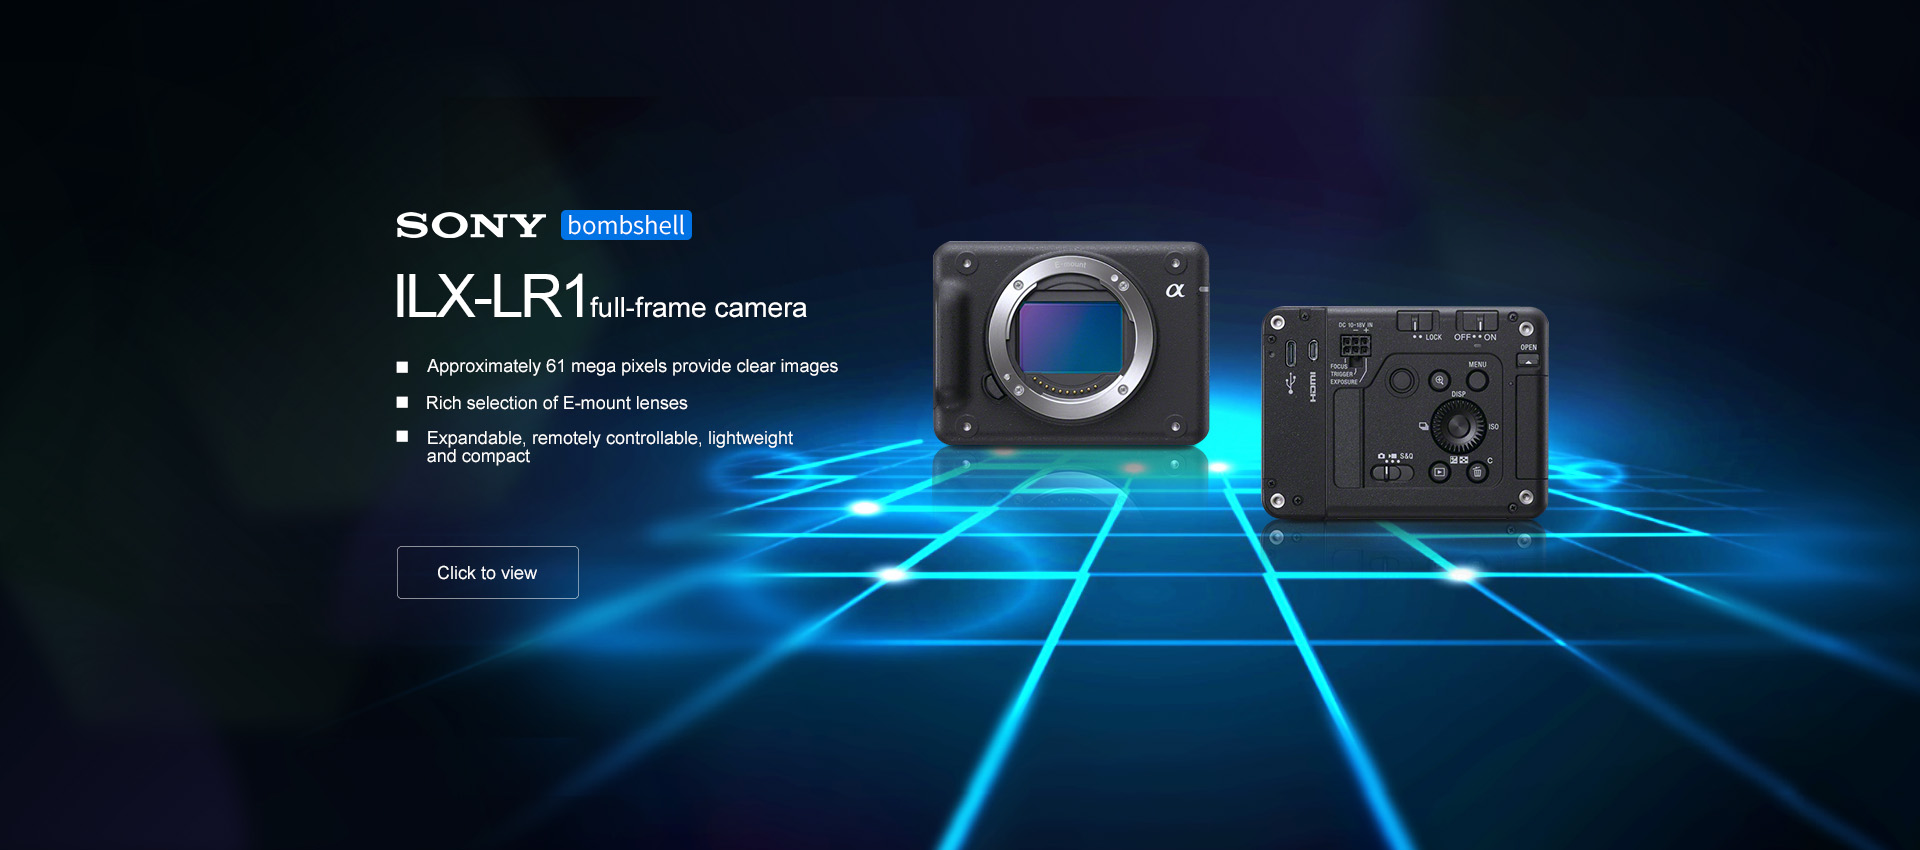 SONY ILX-LR1 full-frame camera